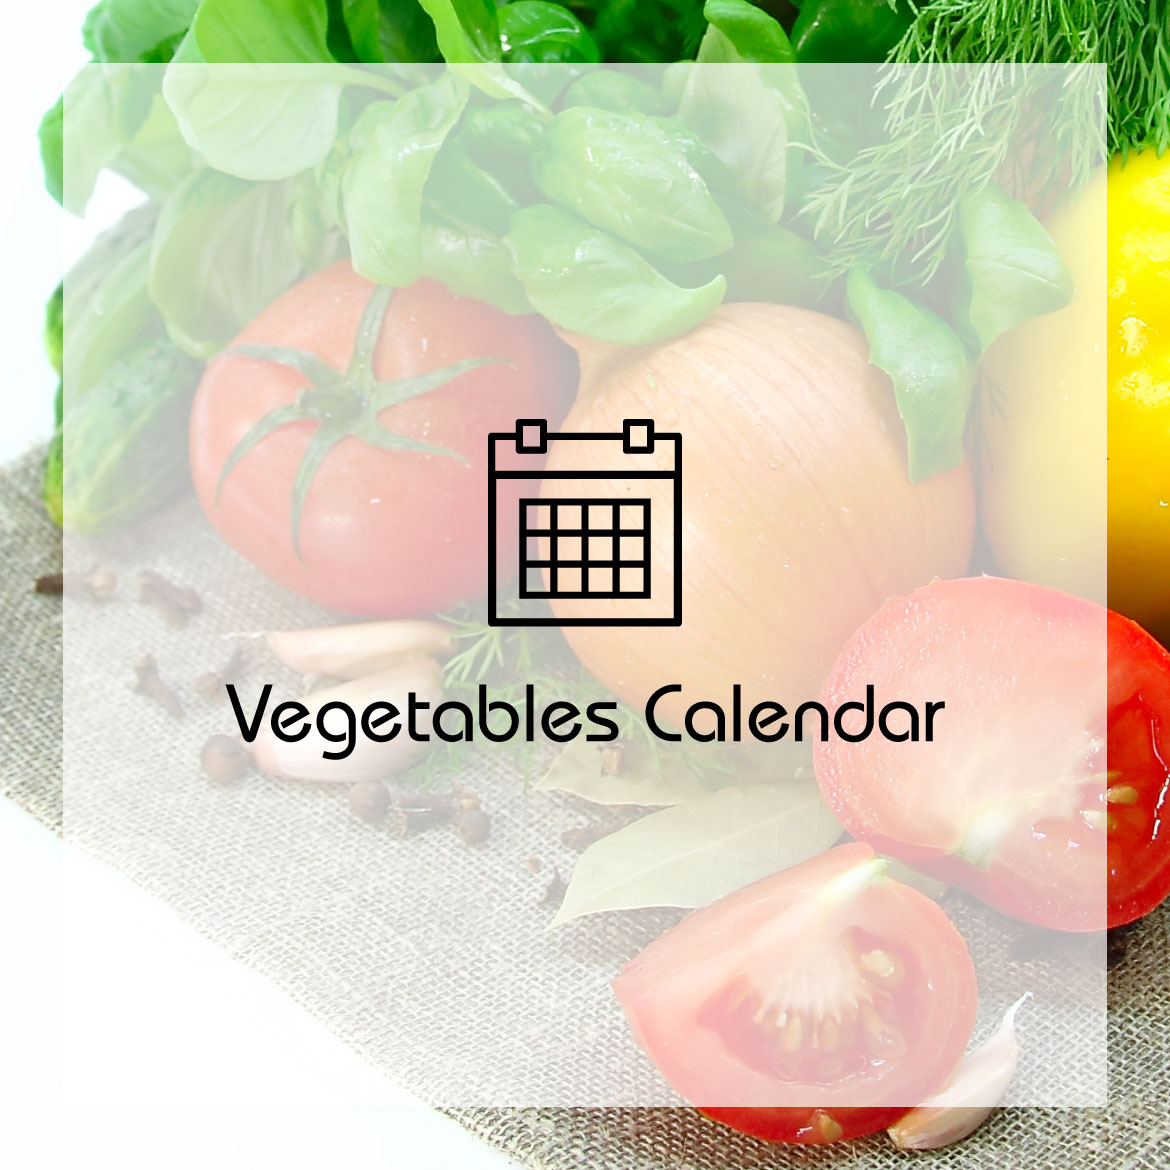 Vegetables Calendar